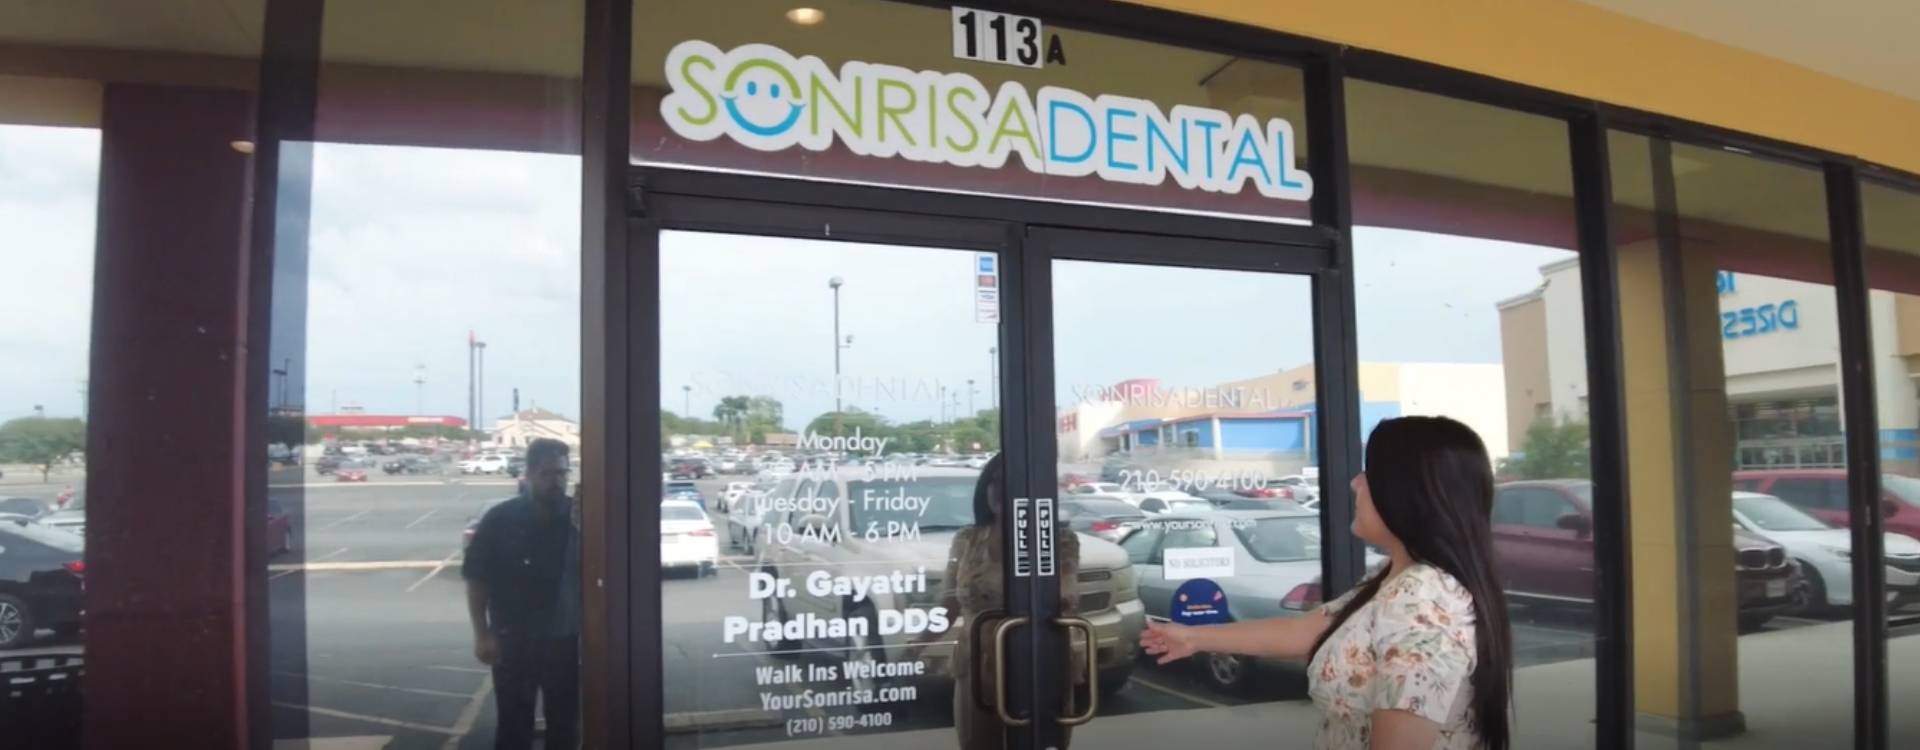 Video of Sonrisa Dental office in San Antonio